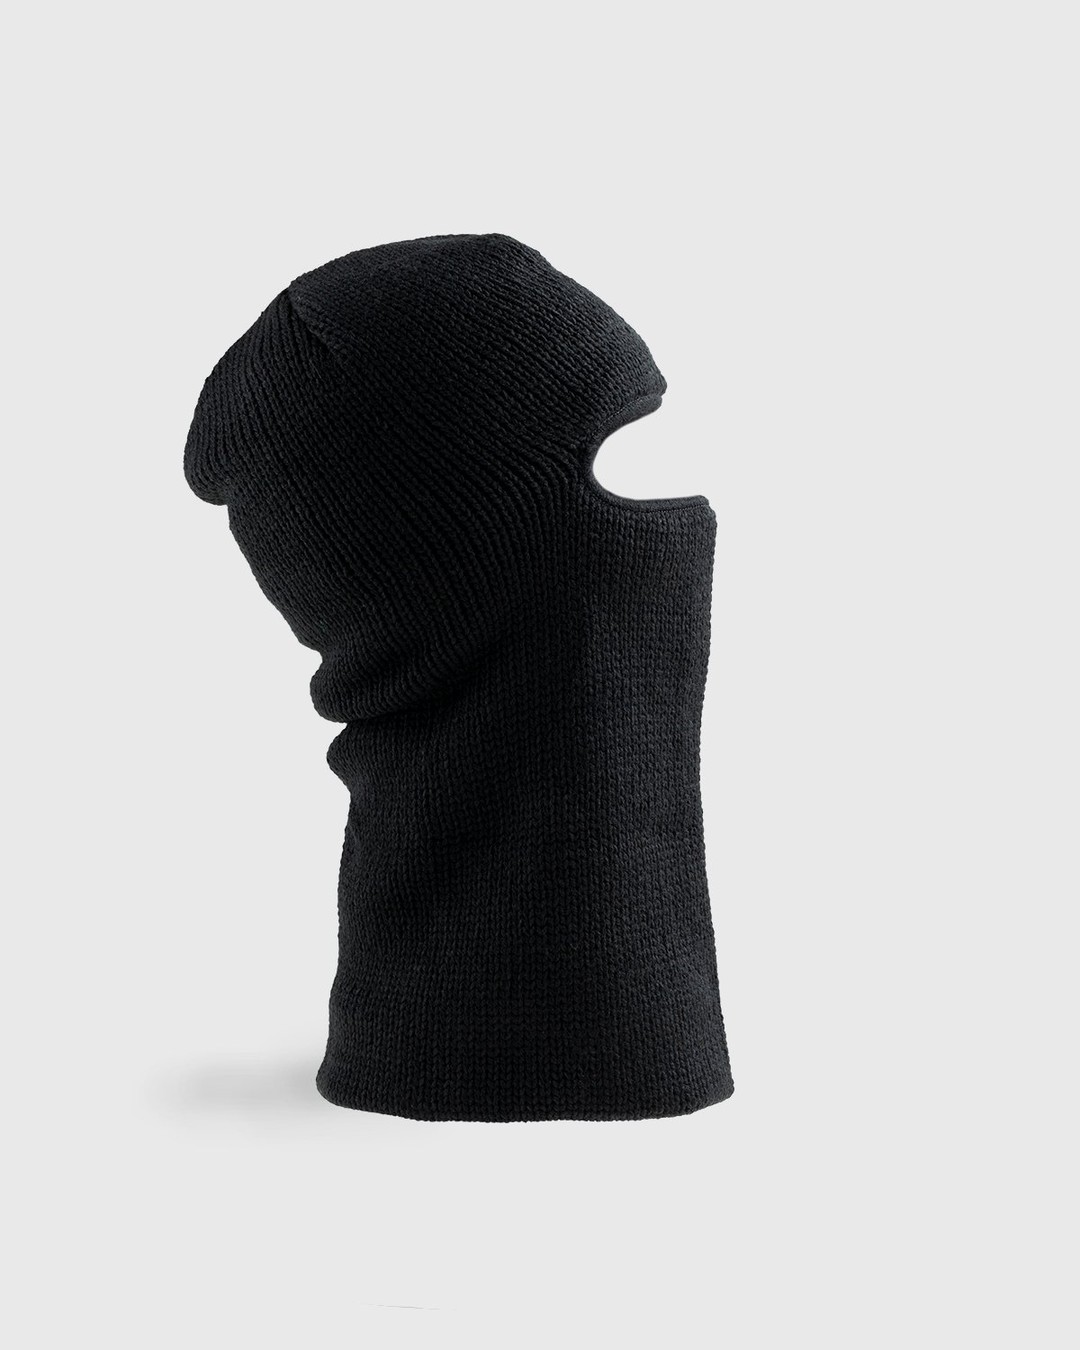 Carhartt WIP – Storm Mask Black - Hats - Black - Image 3